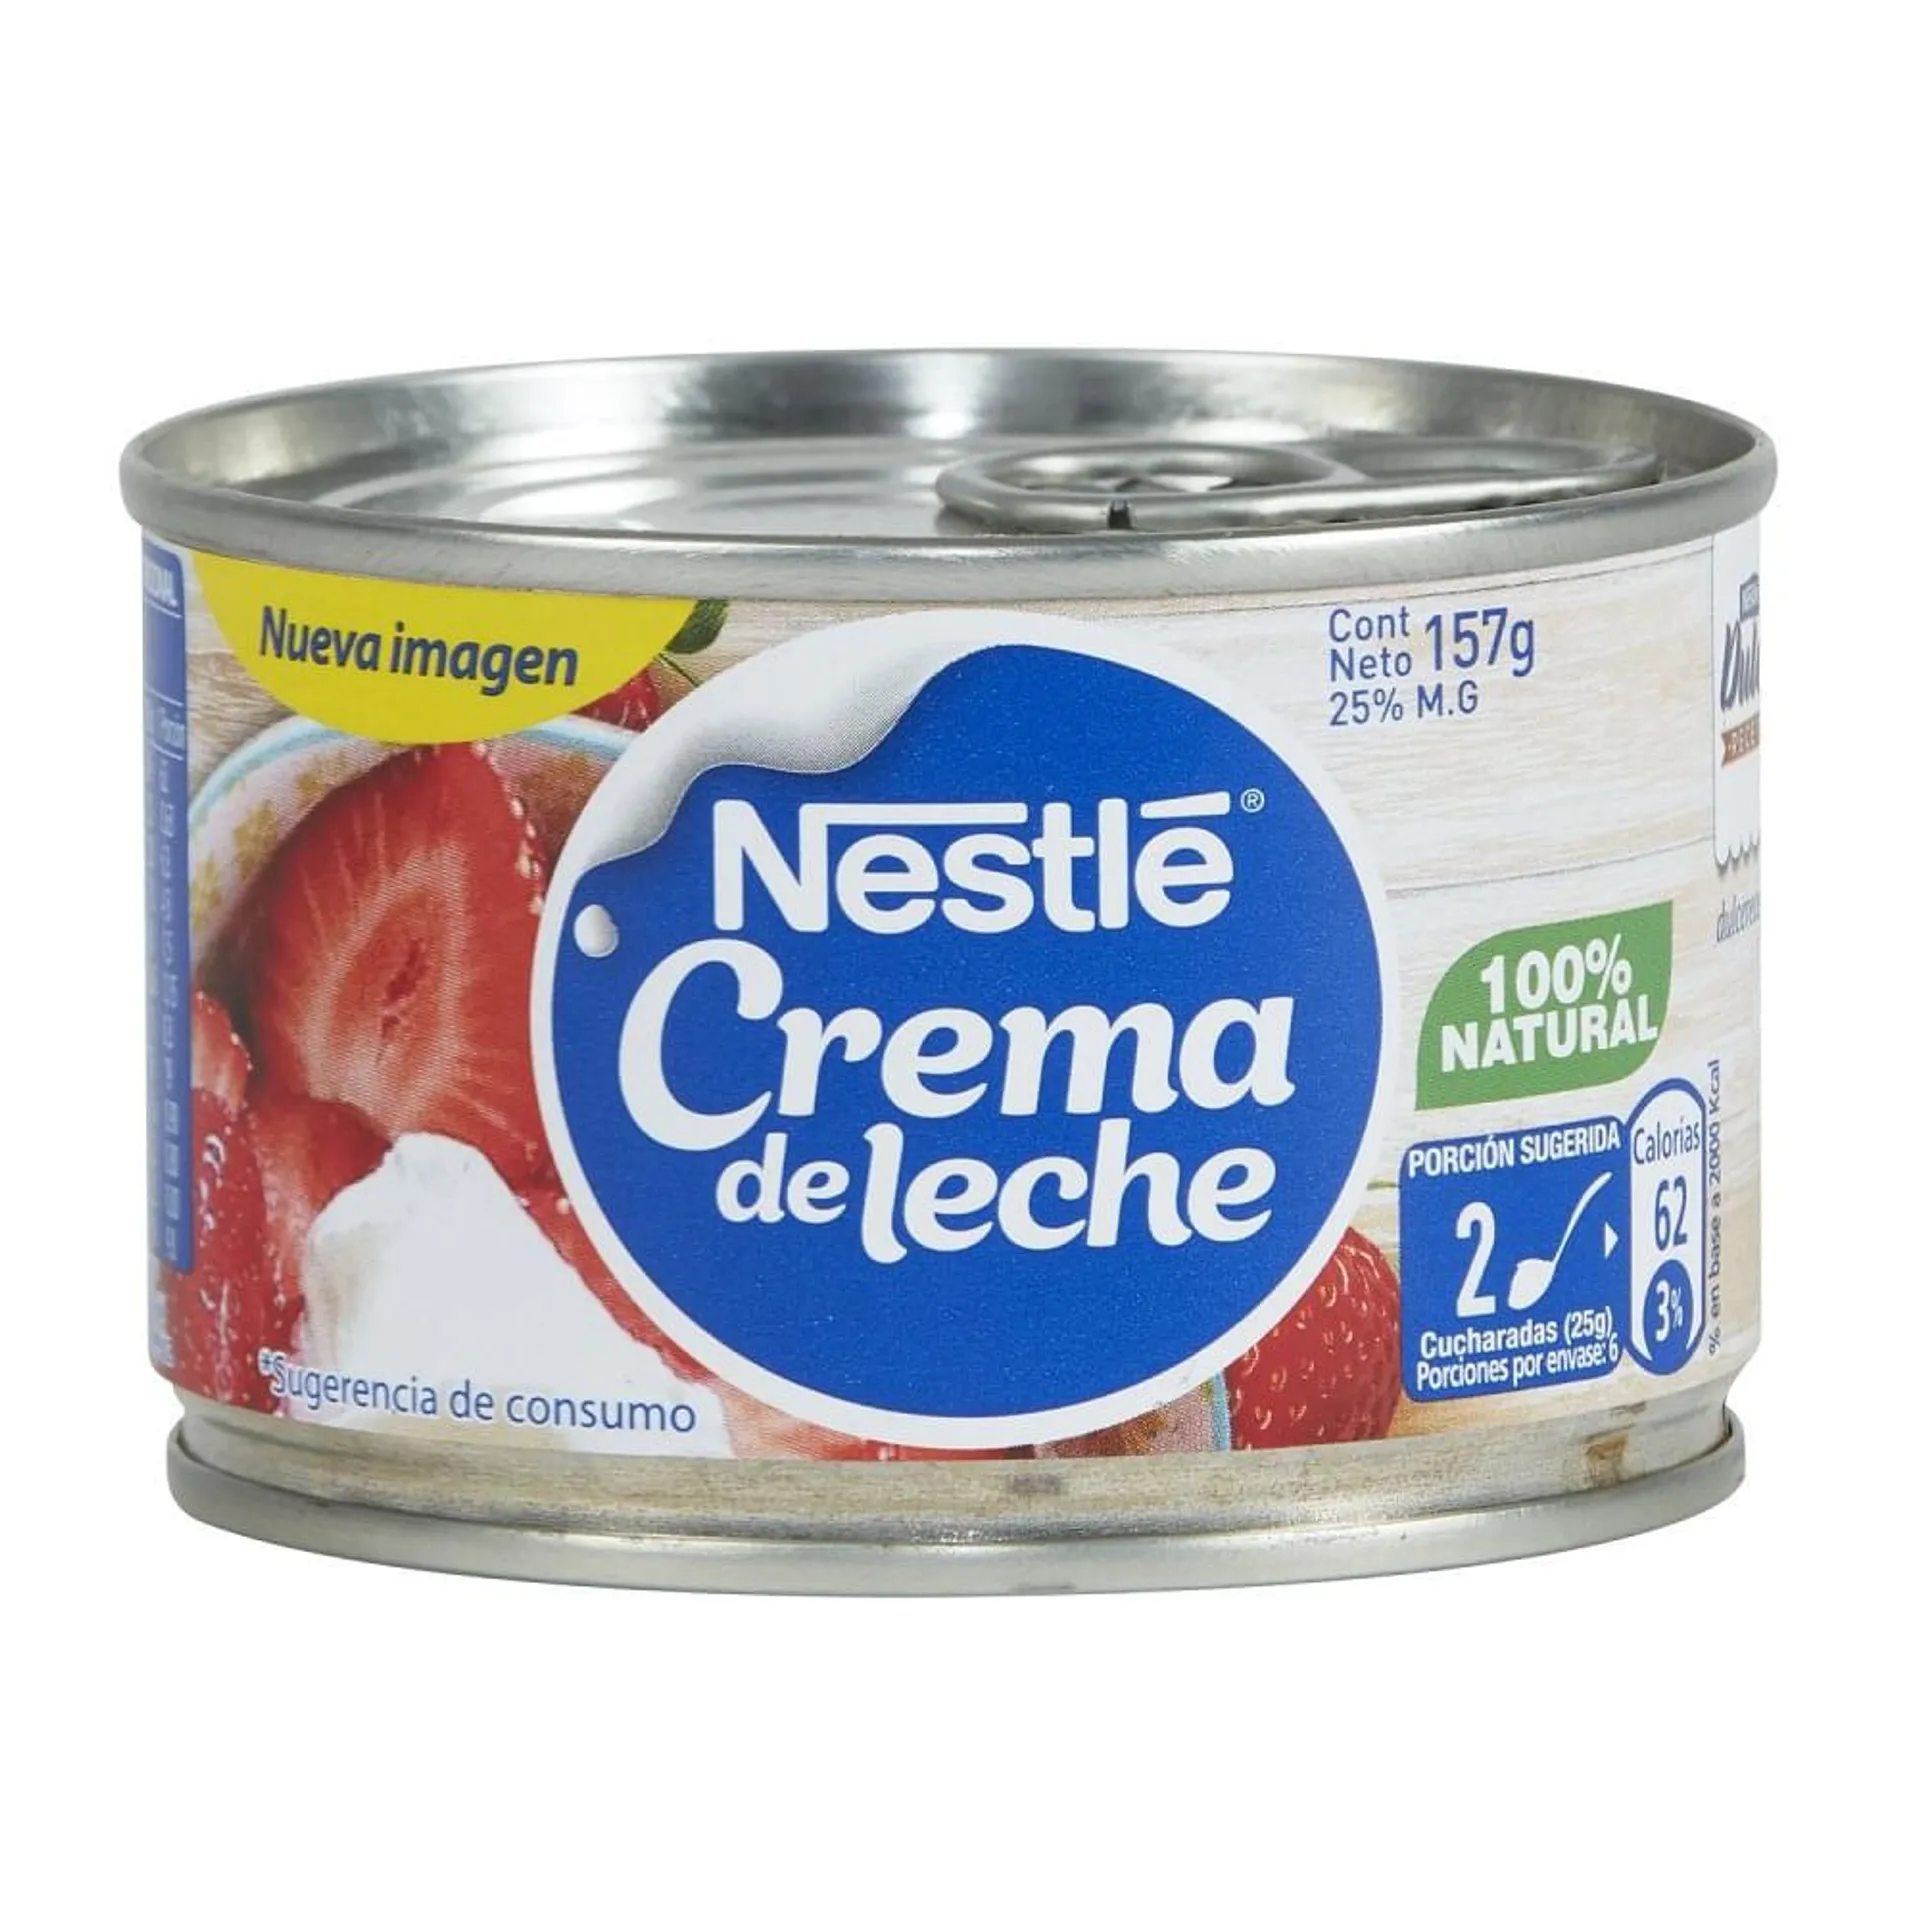 Crema de leche Nestlé lata abre fácil 157 g